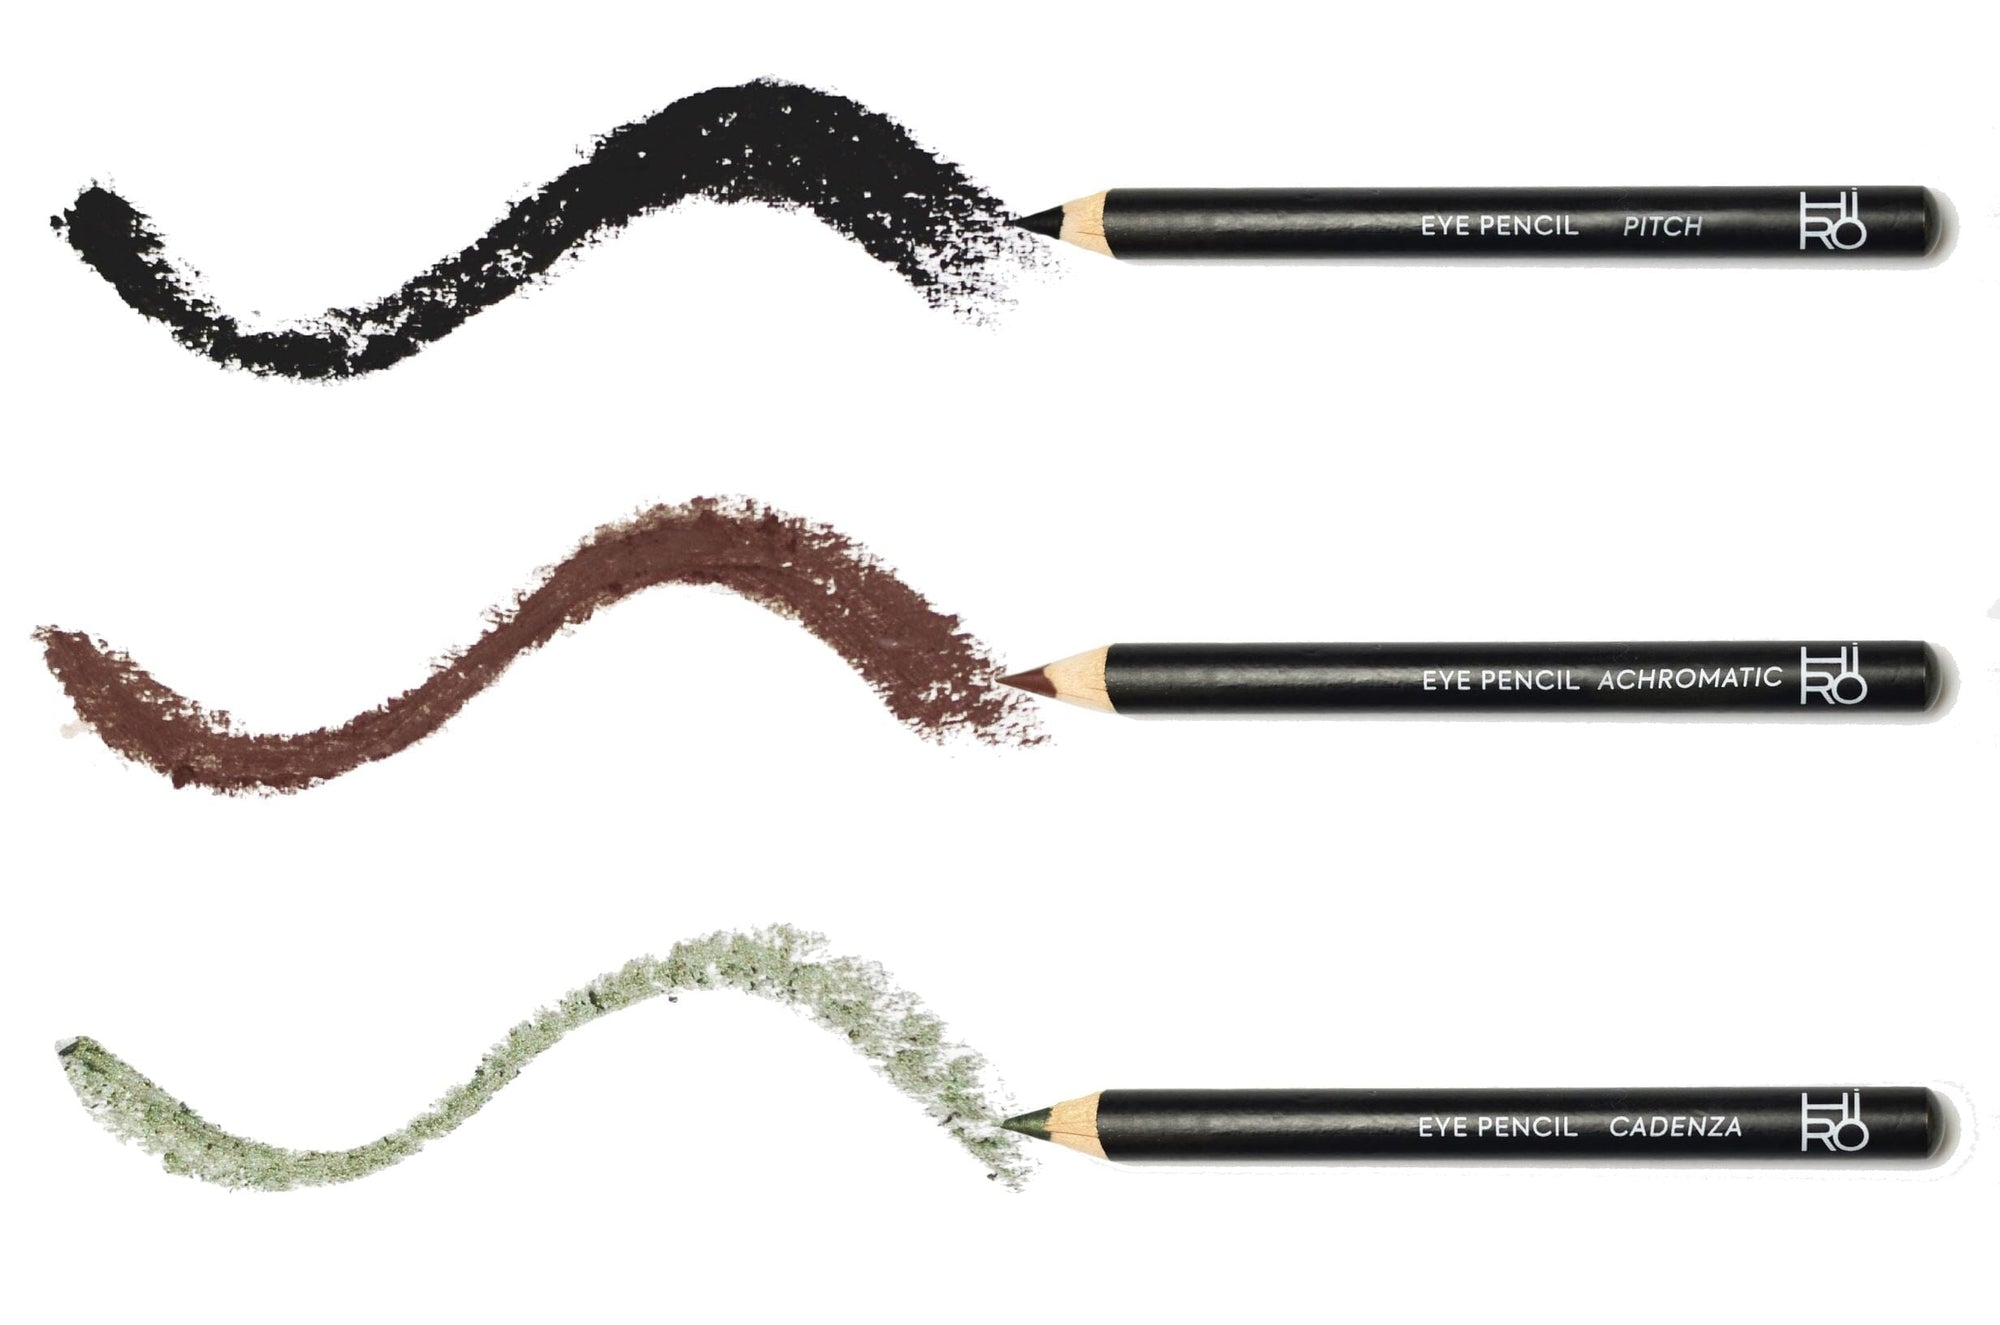 PROMO FREE Eye Pencil Pitch - Deep Black Eyeliner HIRO Cosmetics - Genuine Selection